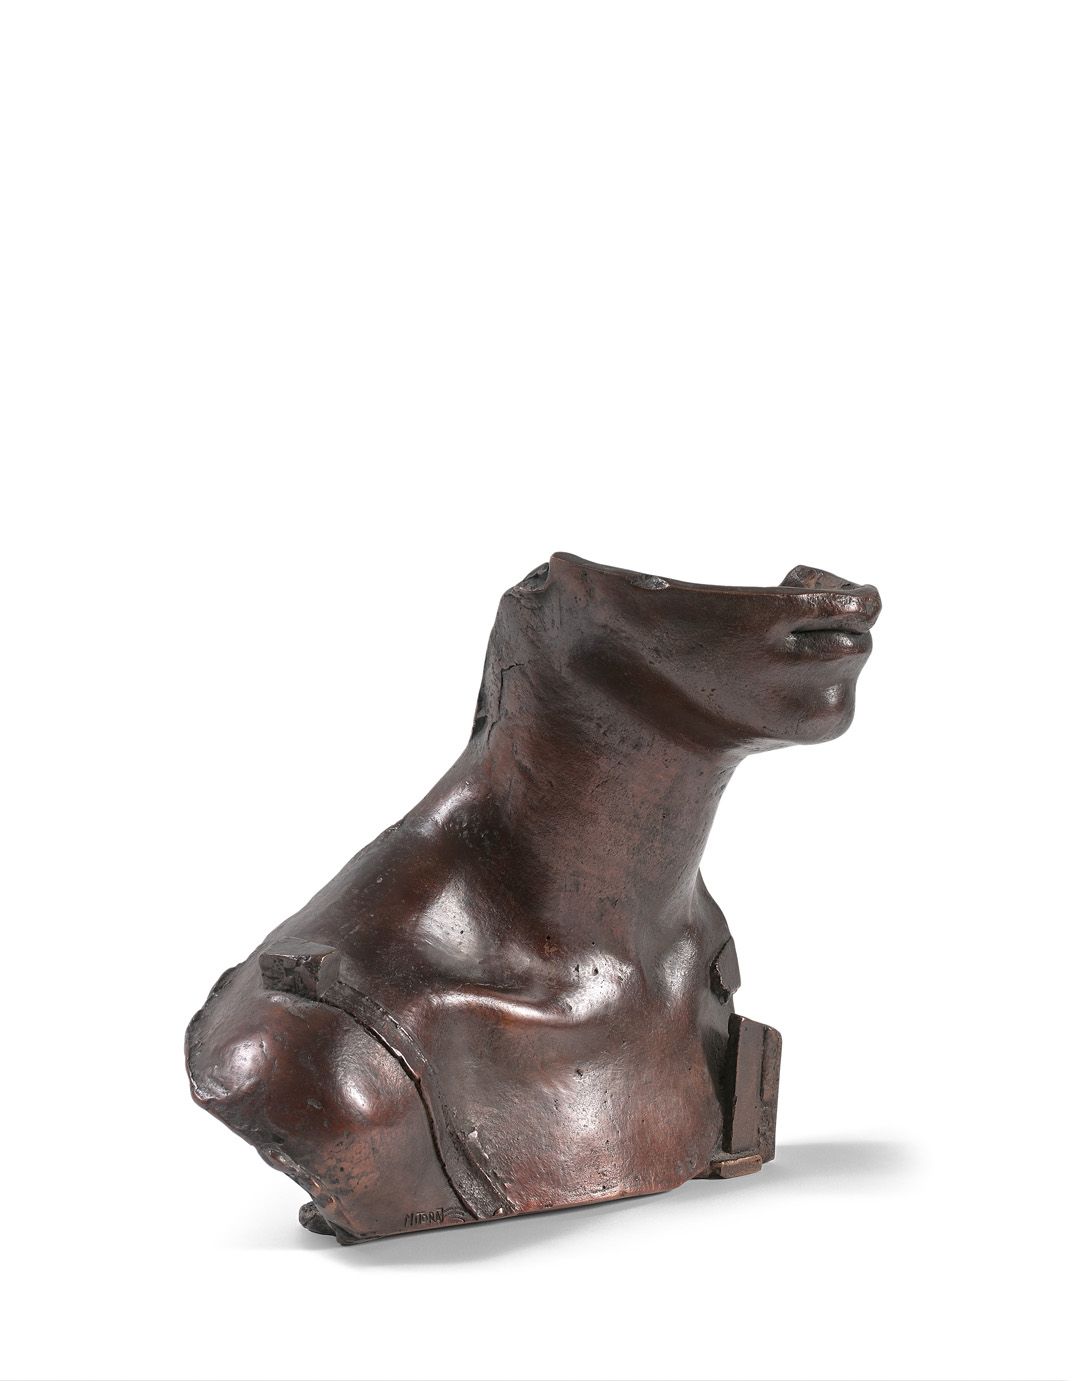 MITORAJ Igor MITORAJ (1944-2014)

Stella (1980)

Patinated bronze proof, signed,&hellip;